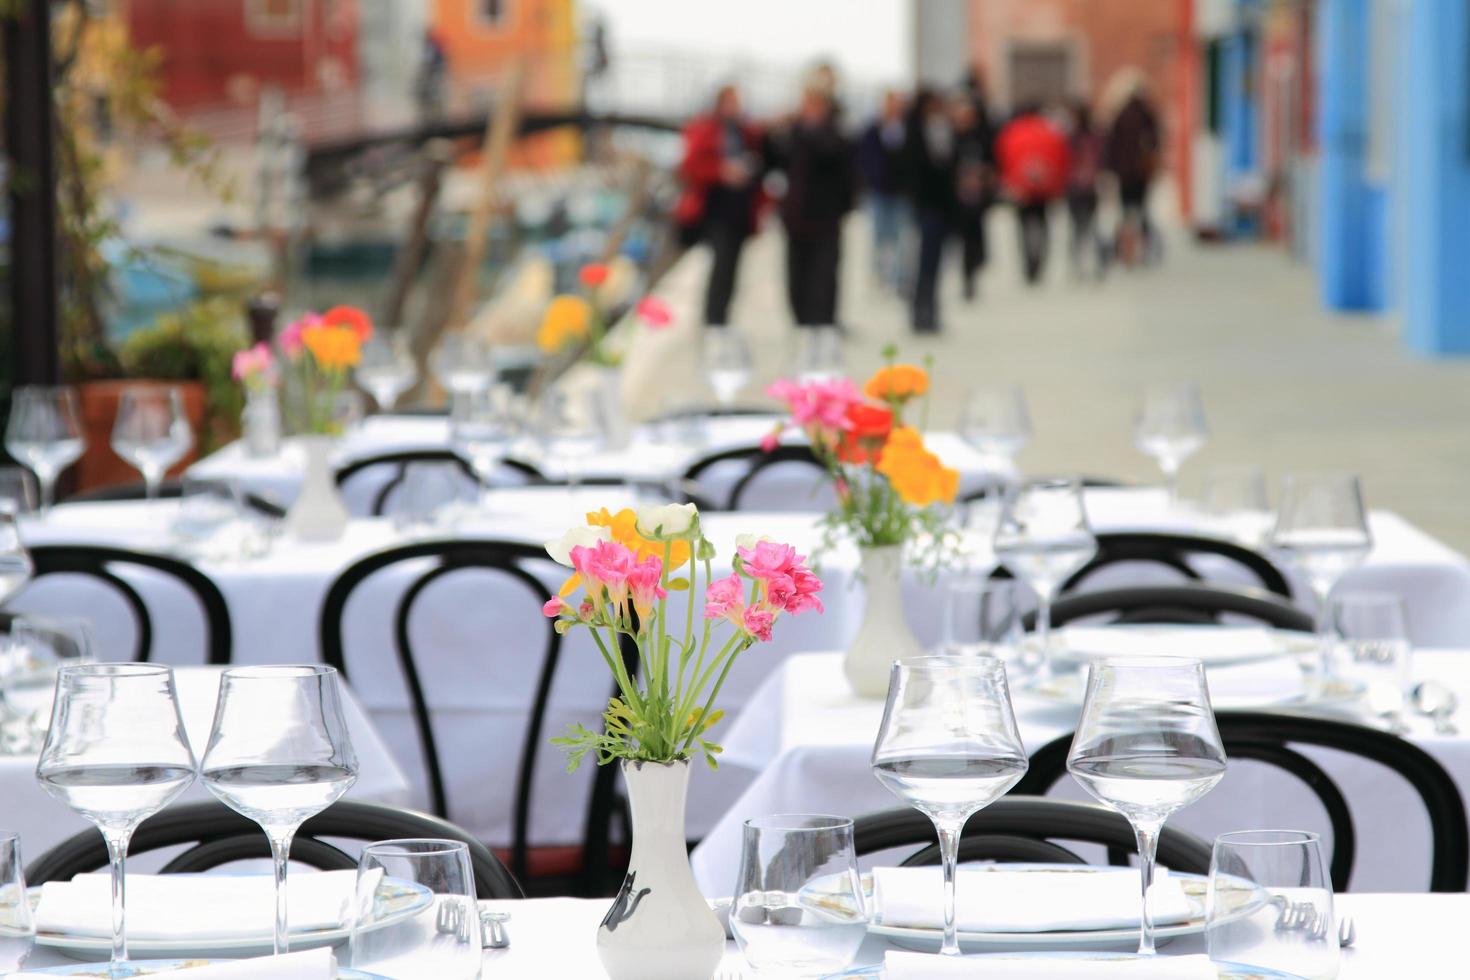 Terrace seat of Restaurant at Venice Italy photo